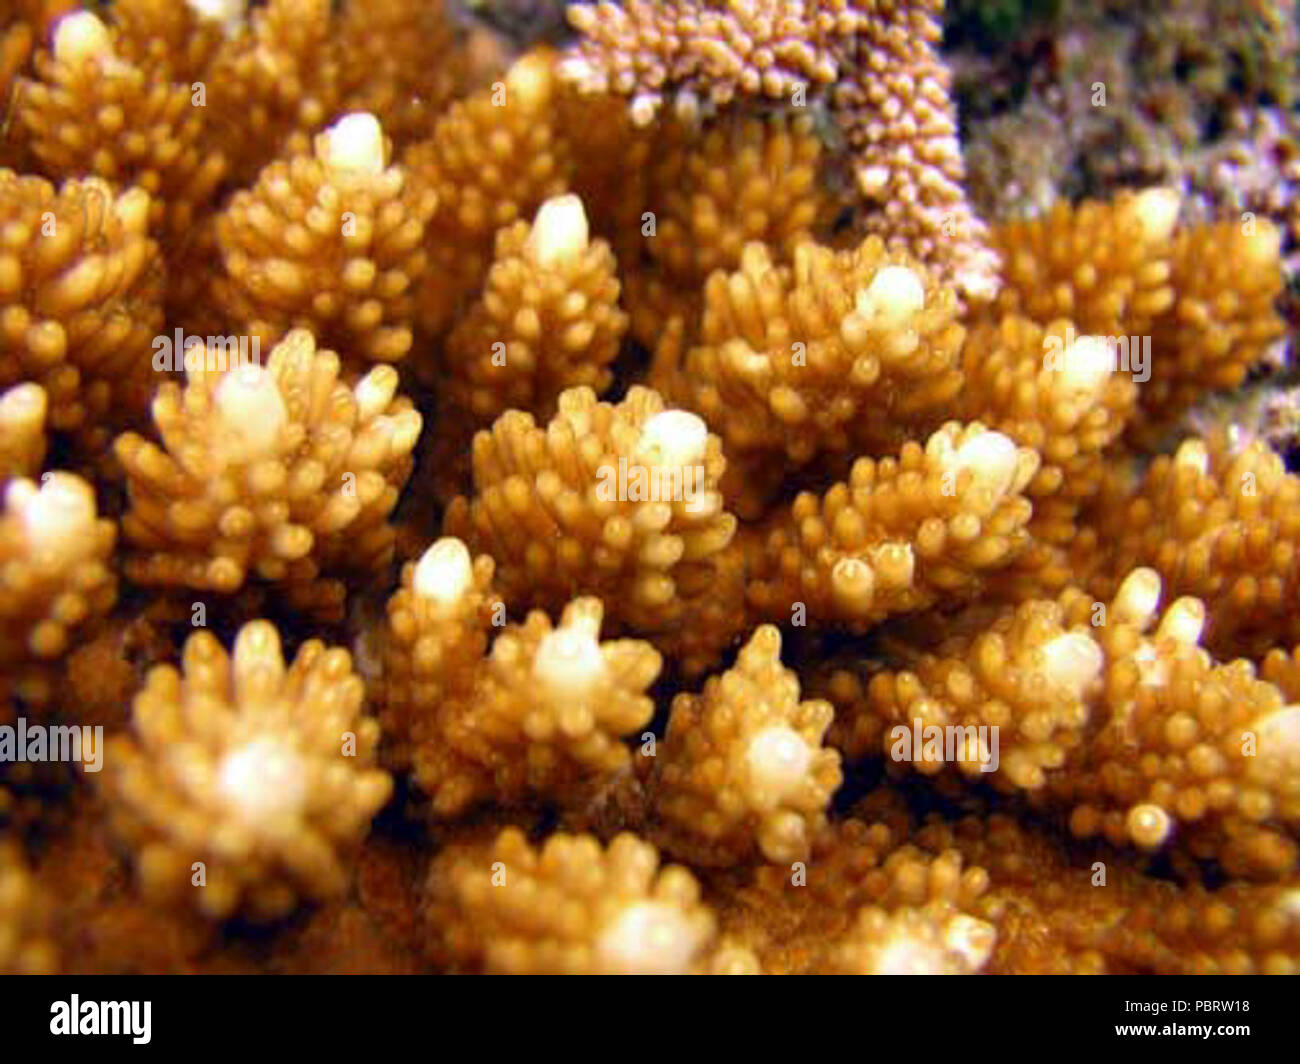 Acropora cophodactyla coralitos. Stock Photo